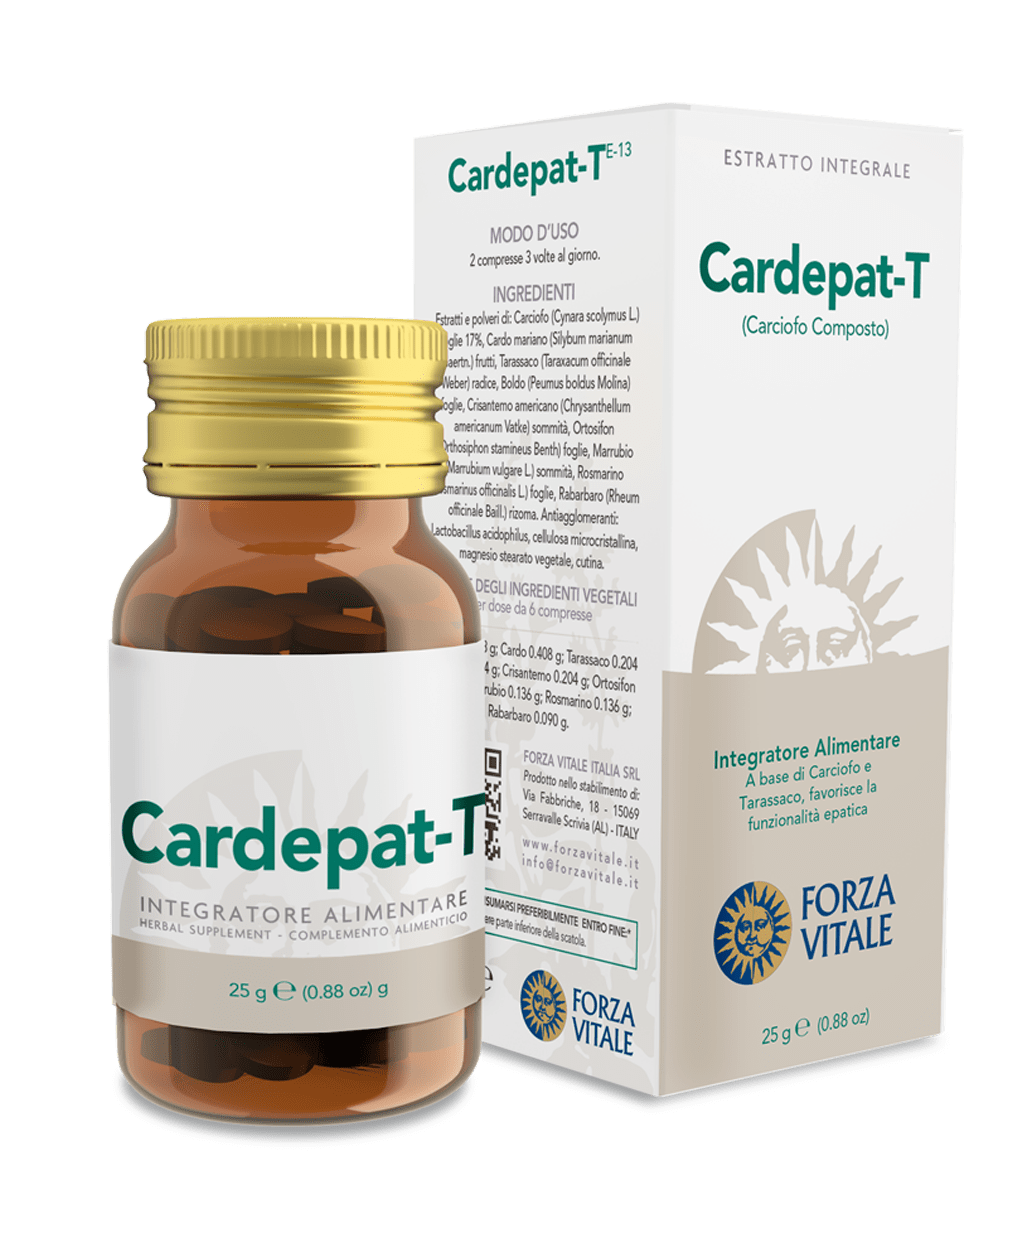 Cardepat - Forza Vitale